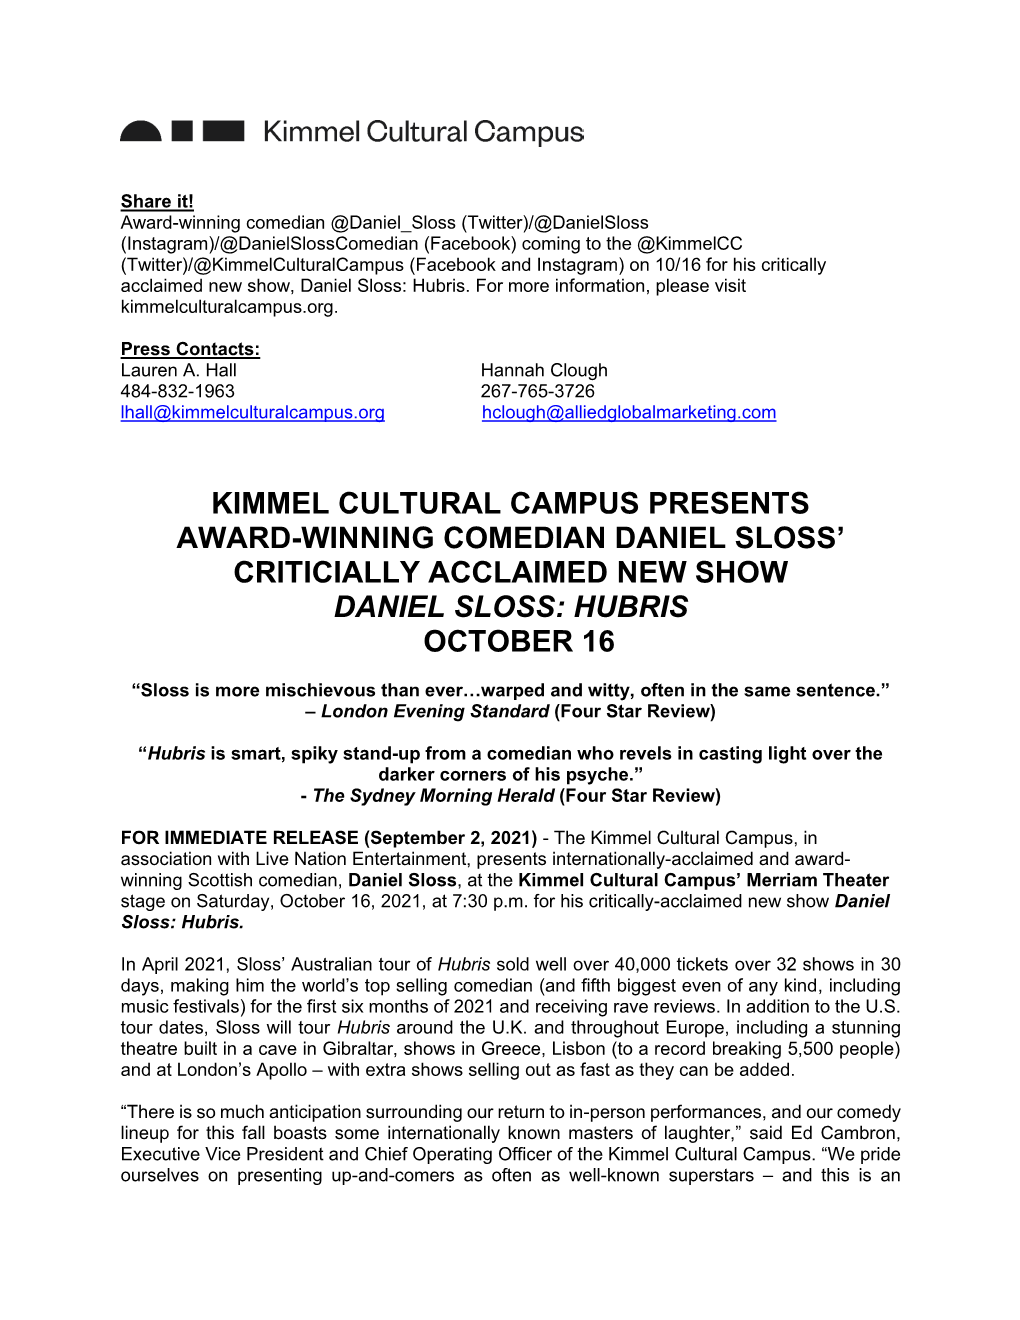 Kimmel Cultural Campus Presents Award-Winning Comedian Daniel Sloss' Criticially Acclaimed New Show Daniel Sloss: Hubris